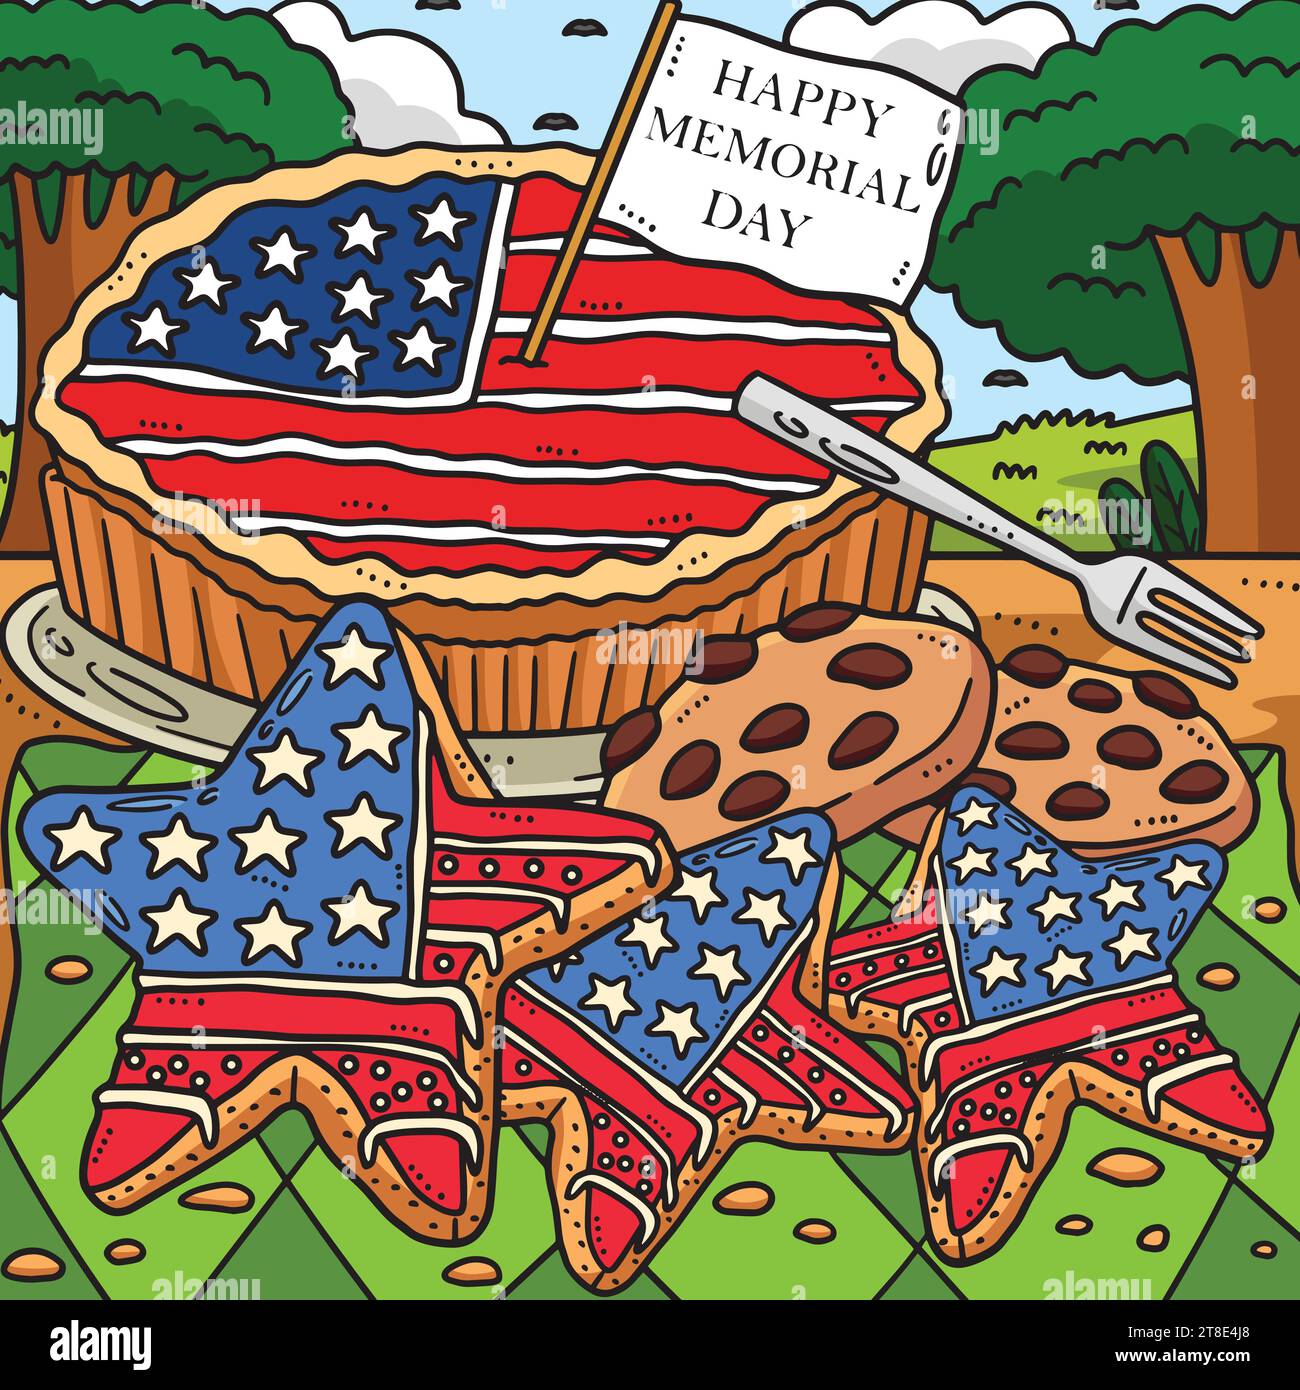 Memorial Day Star Cookies und Pie Colored Cartoon Stock Vektor